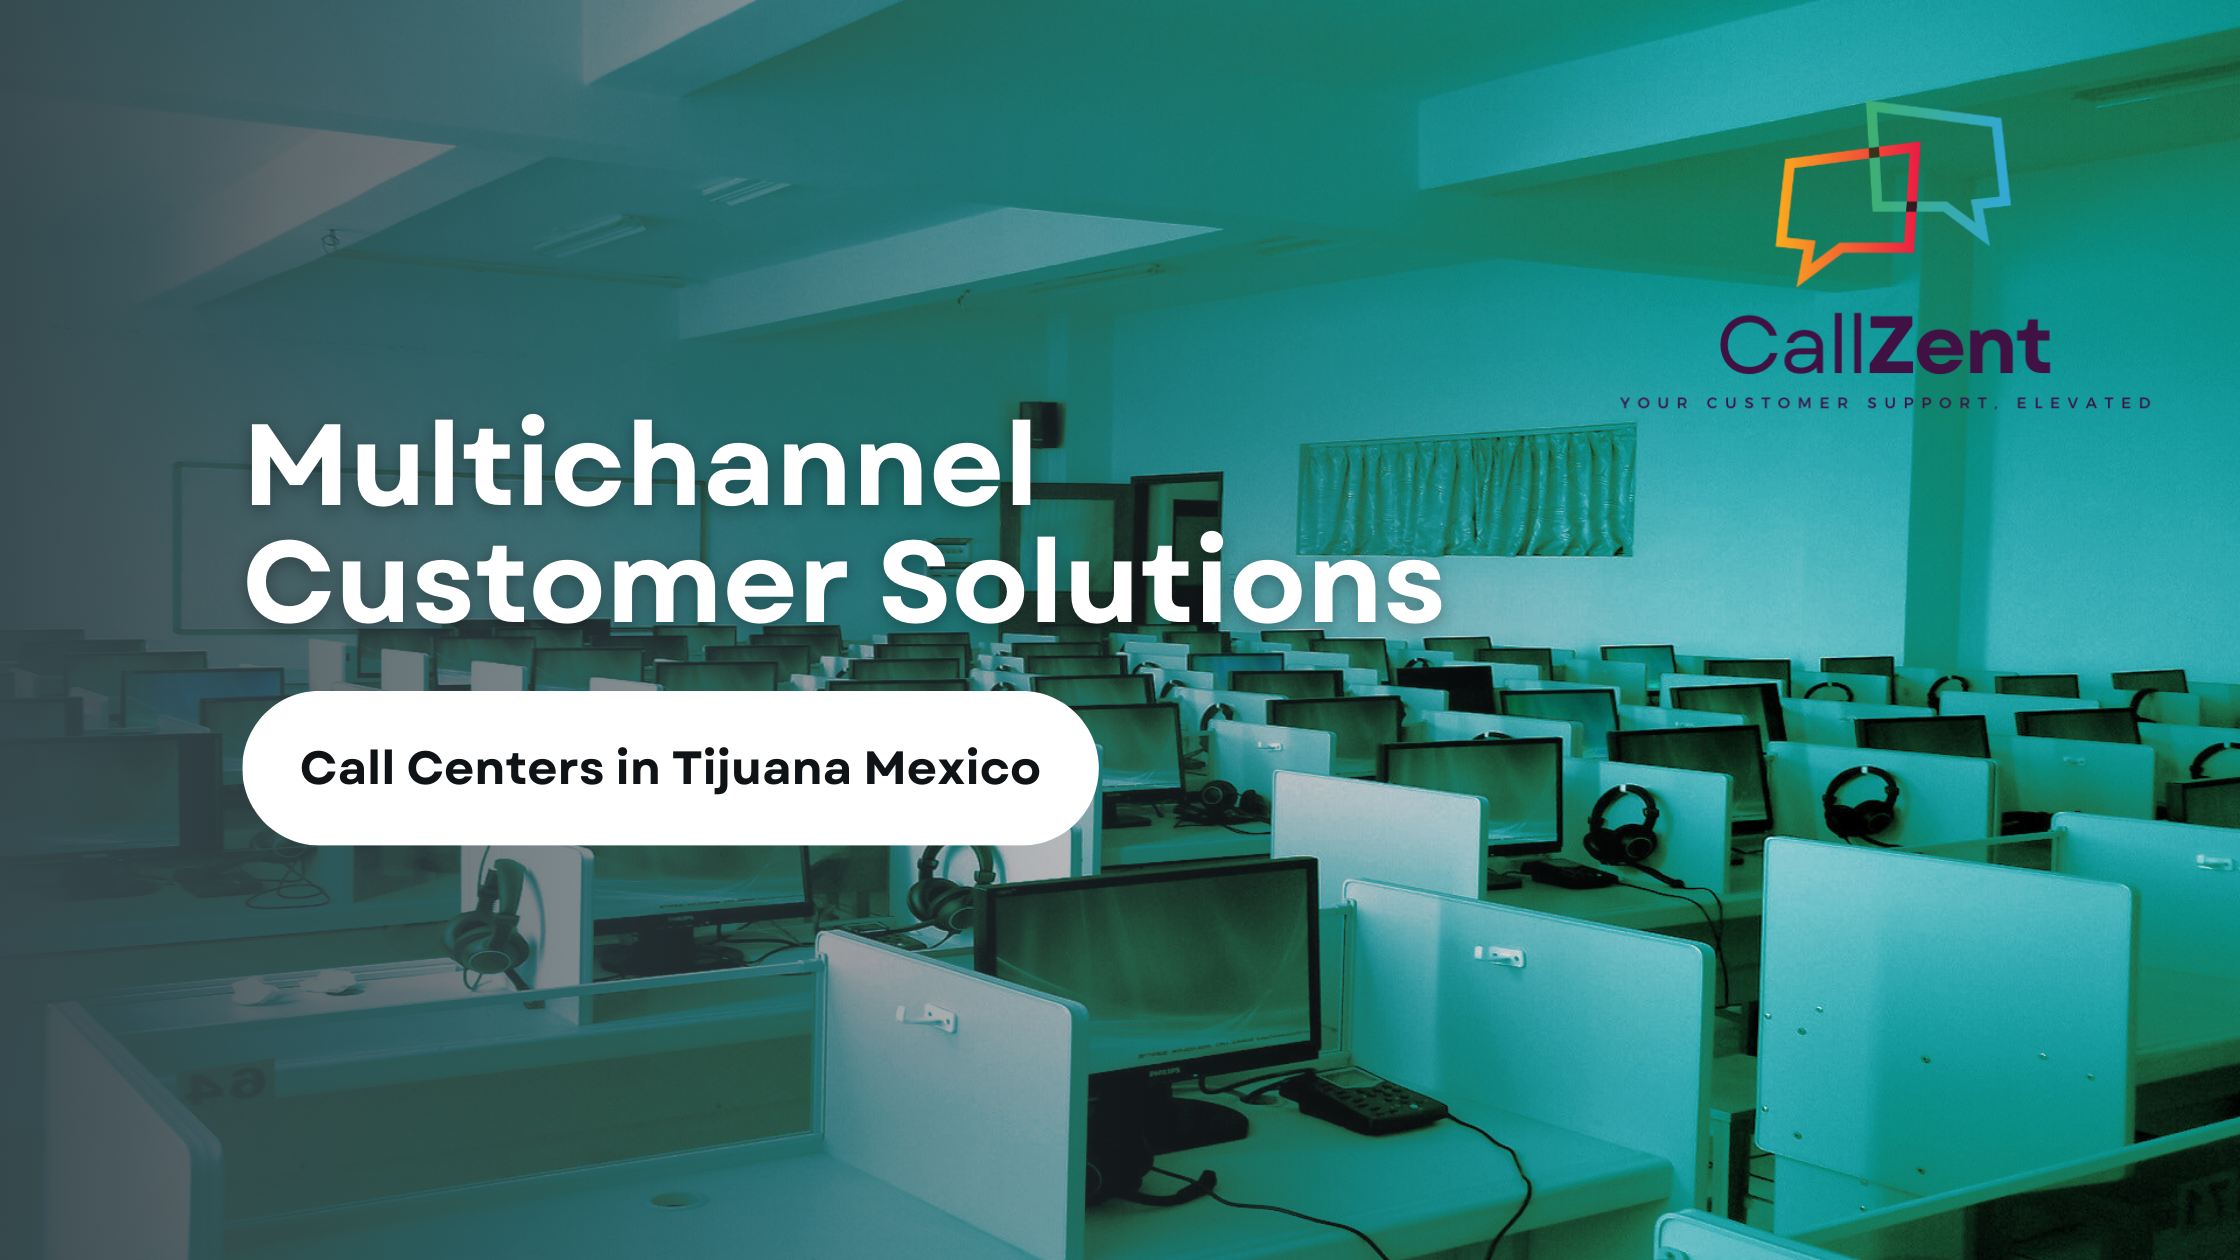 Call Centers in Tijuana Mexico